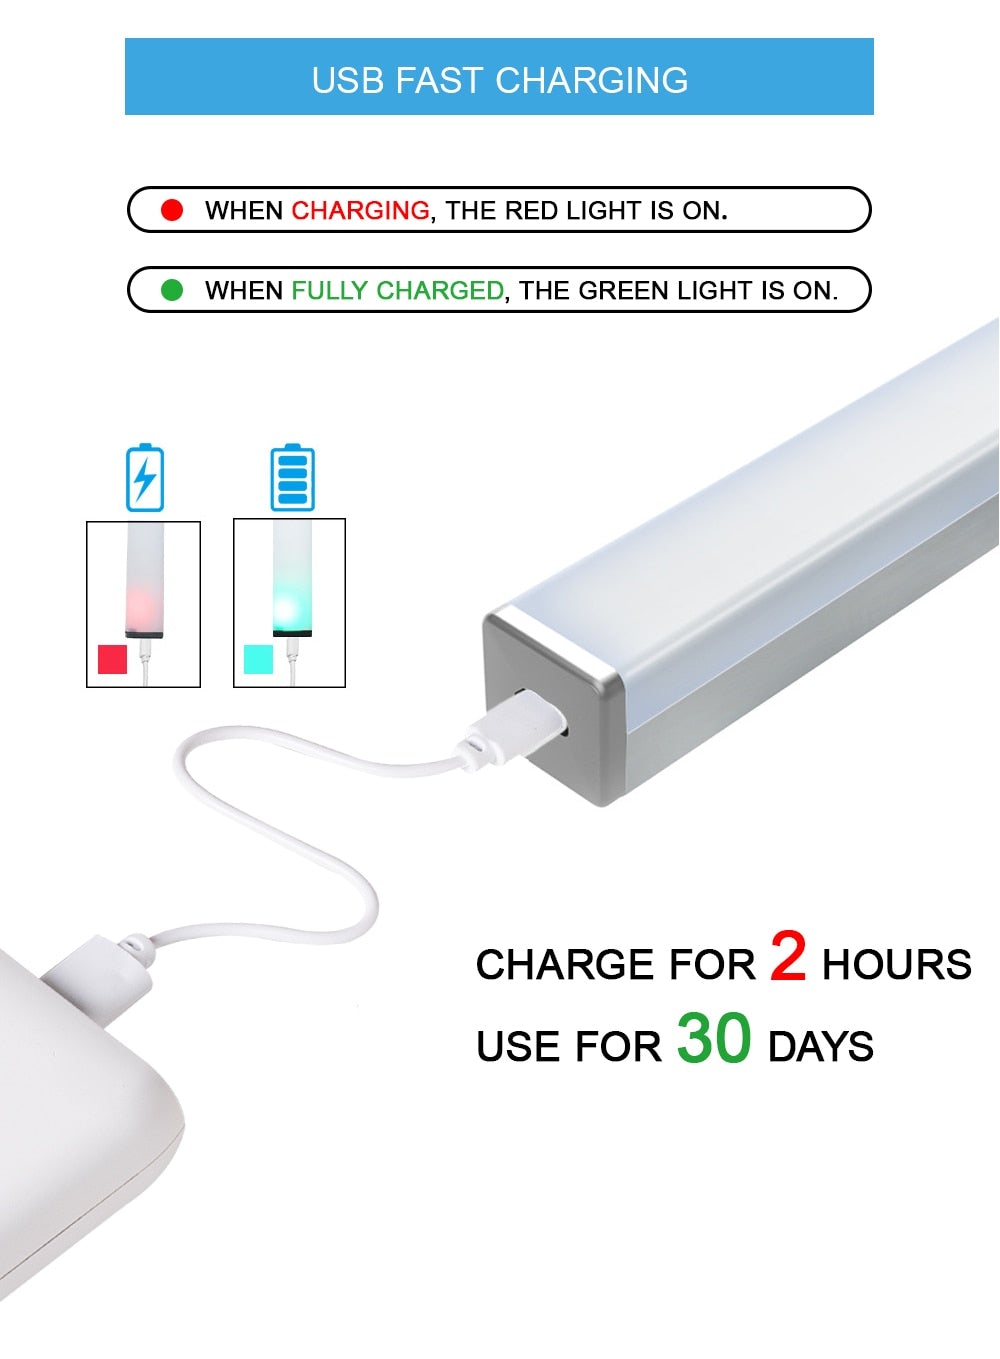 USB Rechargeable Motion LED Light - beumoonshop